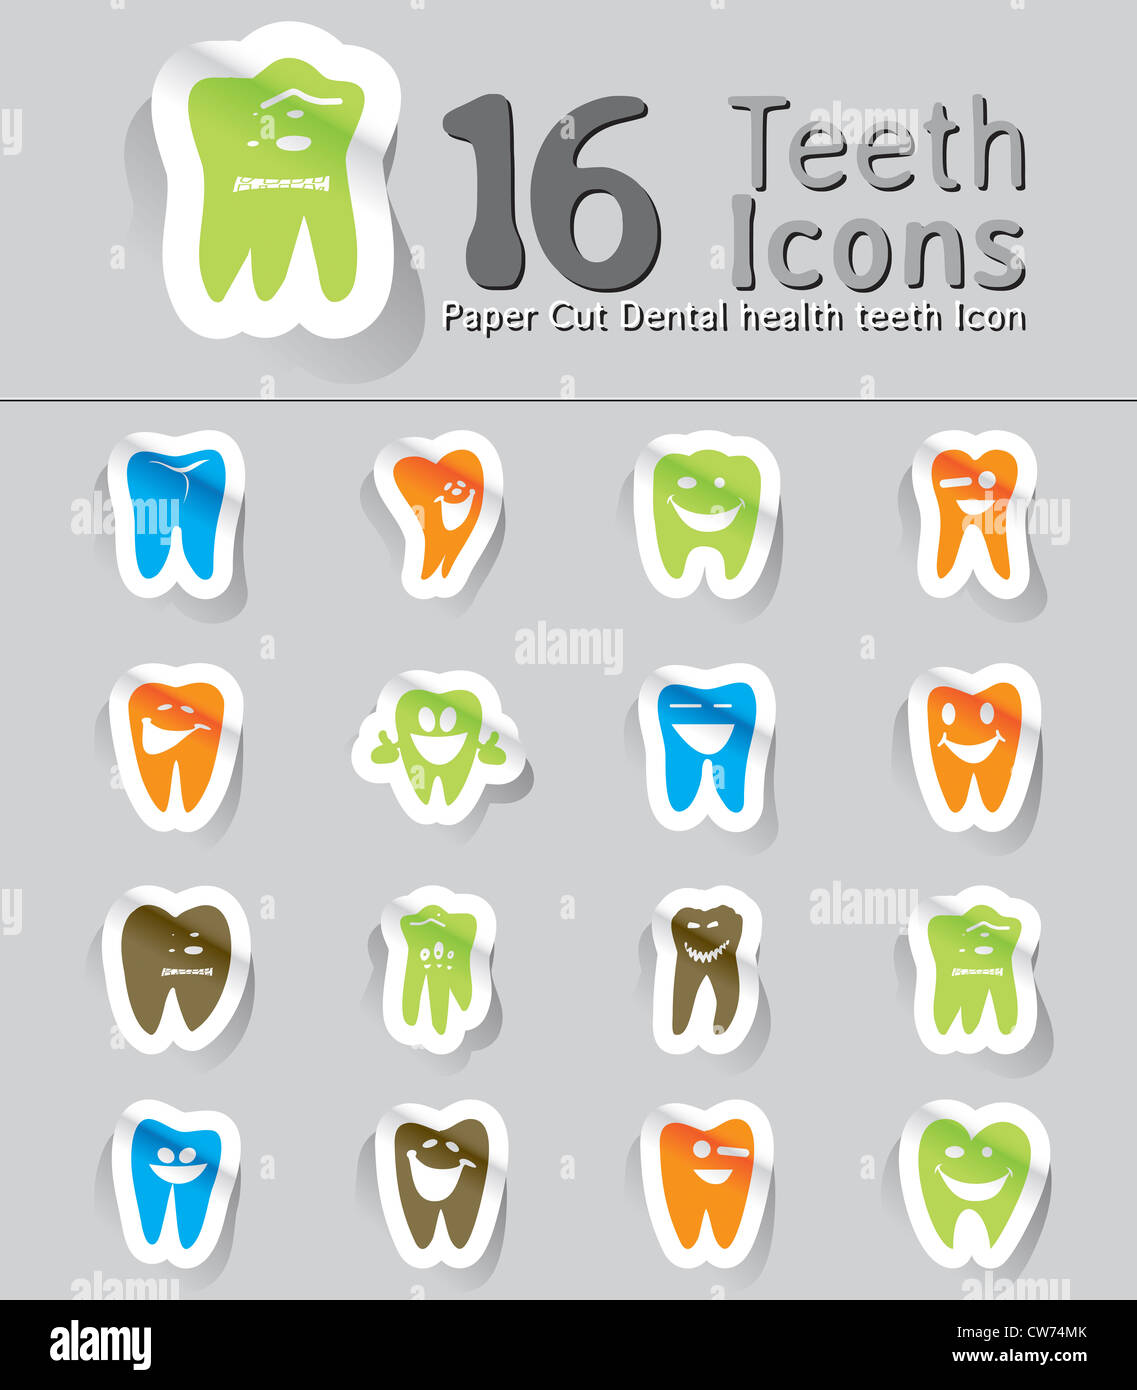 paper cut dental health teeth icon Stock Photo